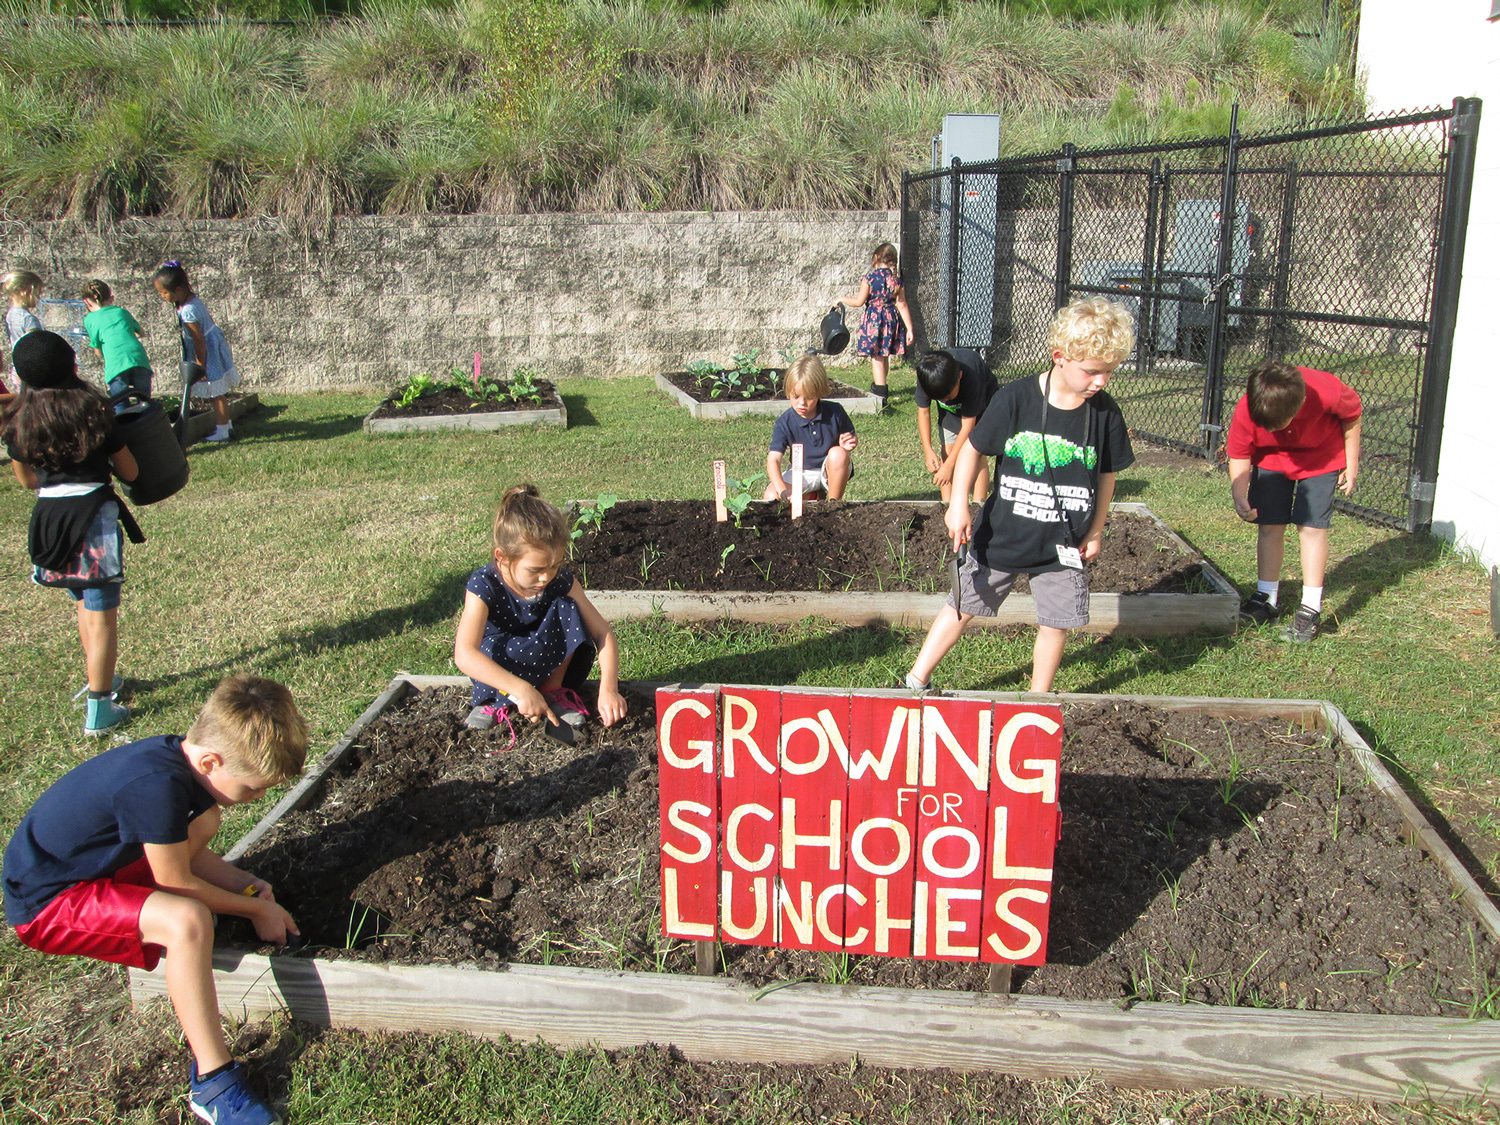 Students planting in their school garden